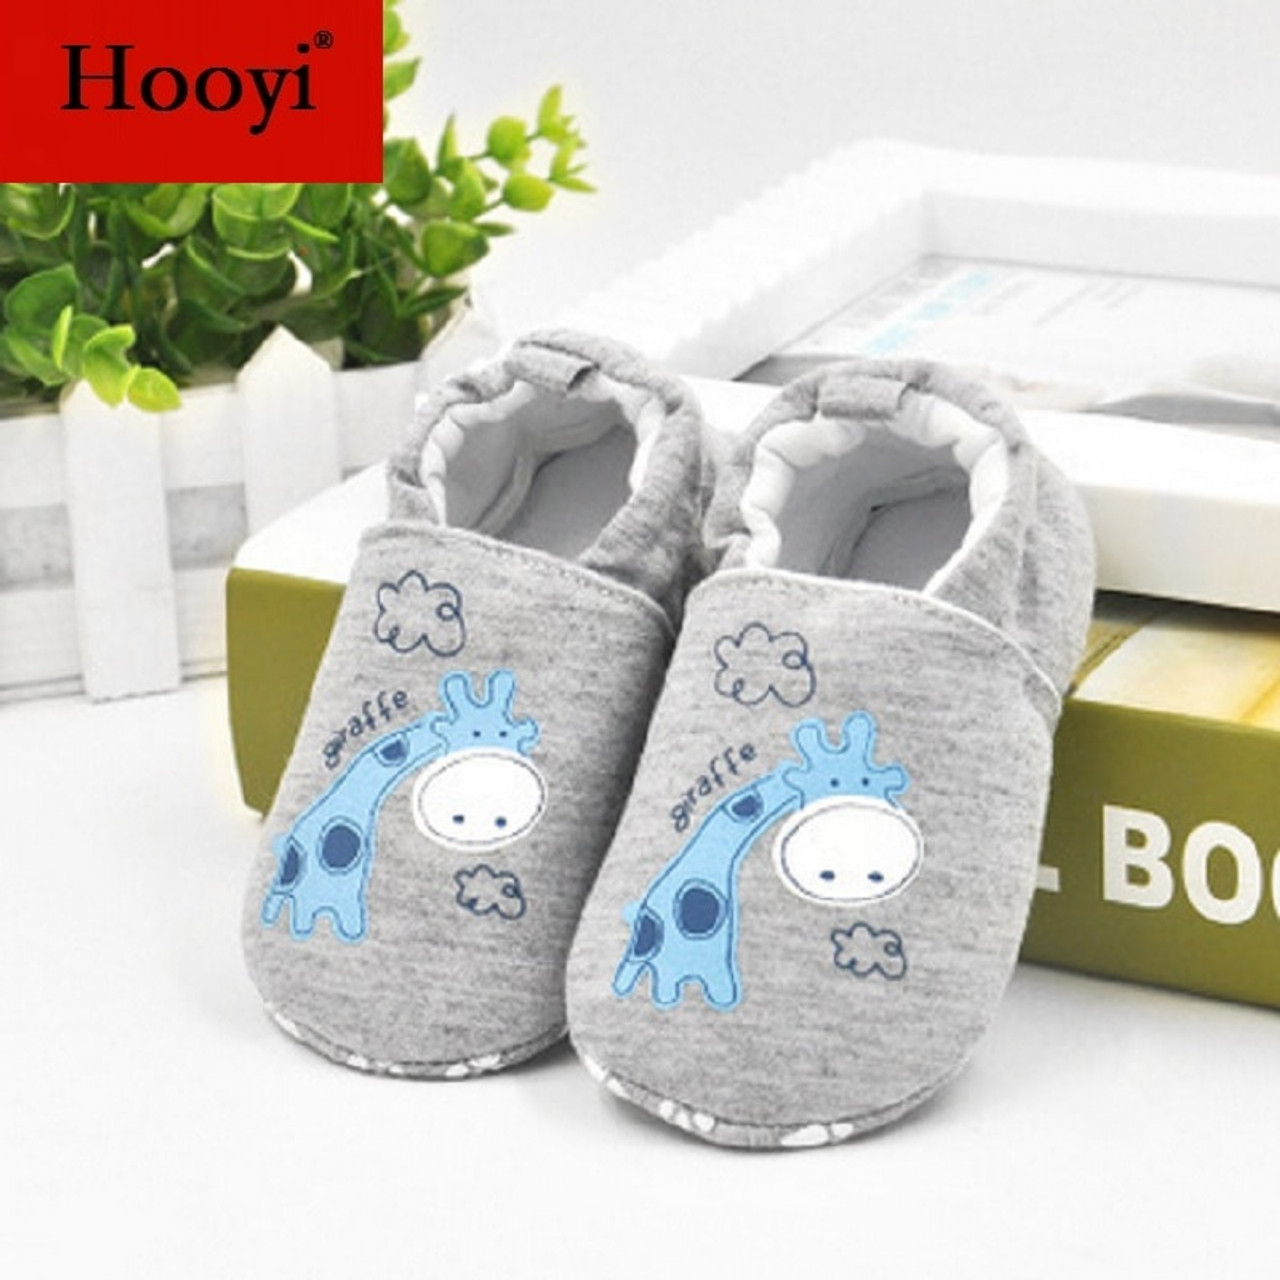 Giraffe Hooyi Baby Boy Shoes Anti-Slip 